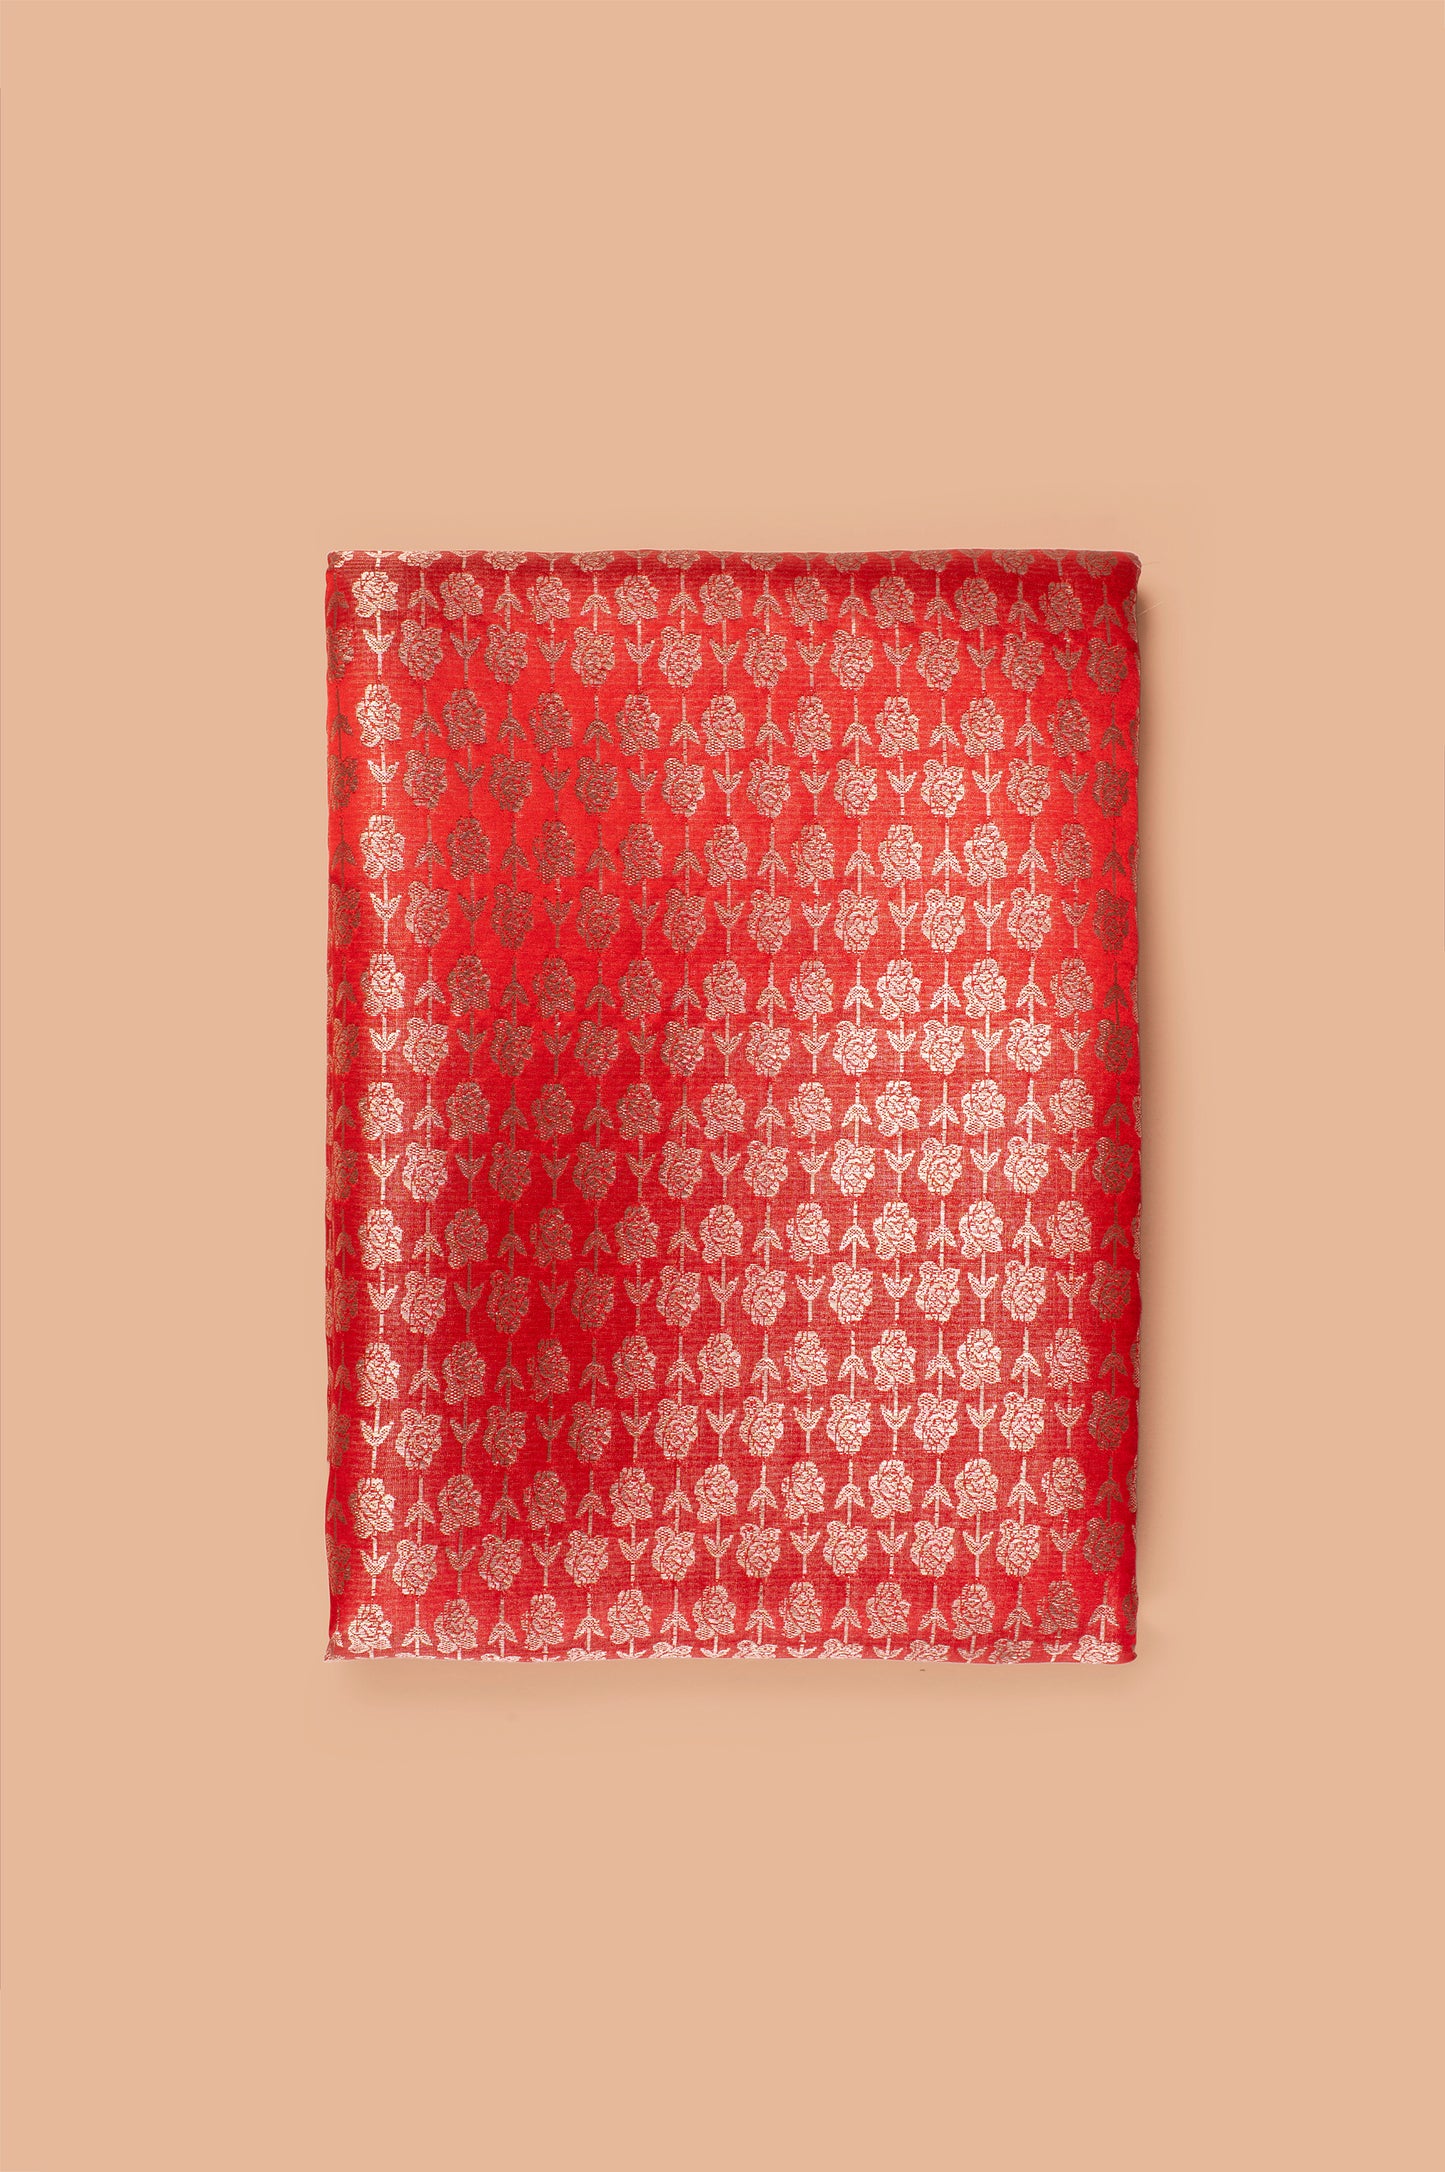 Handwoven Red Satin Silk Fabric